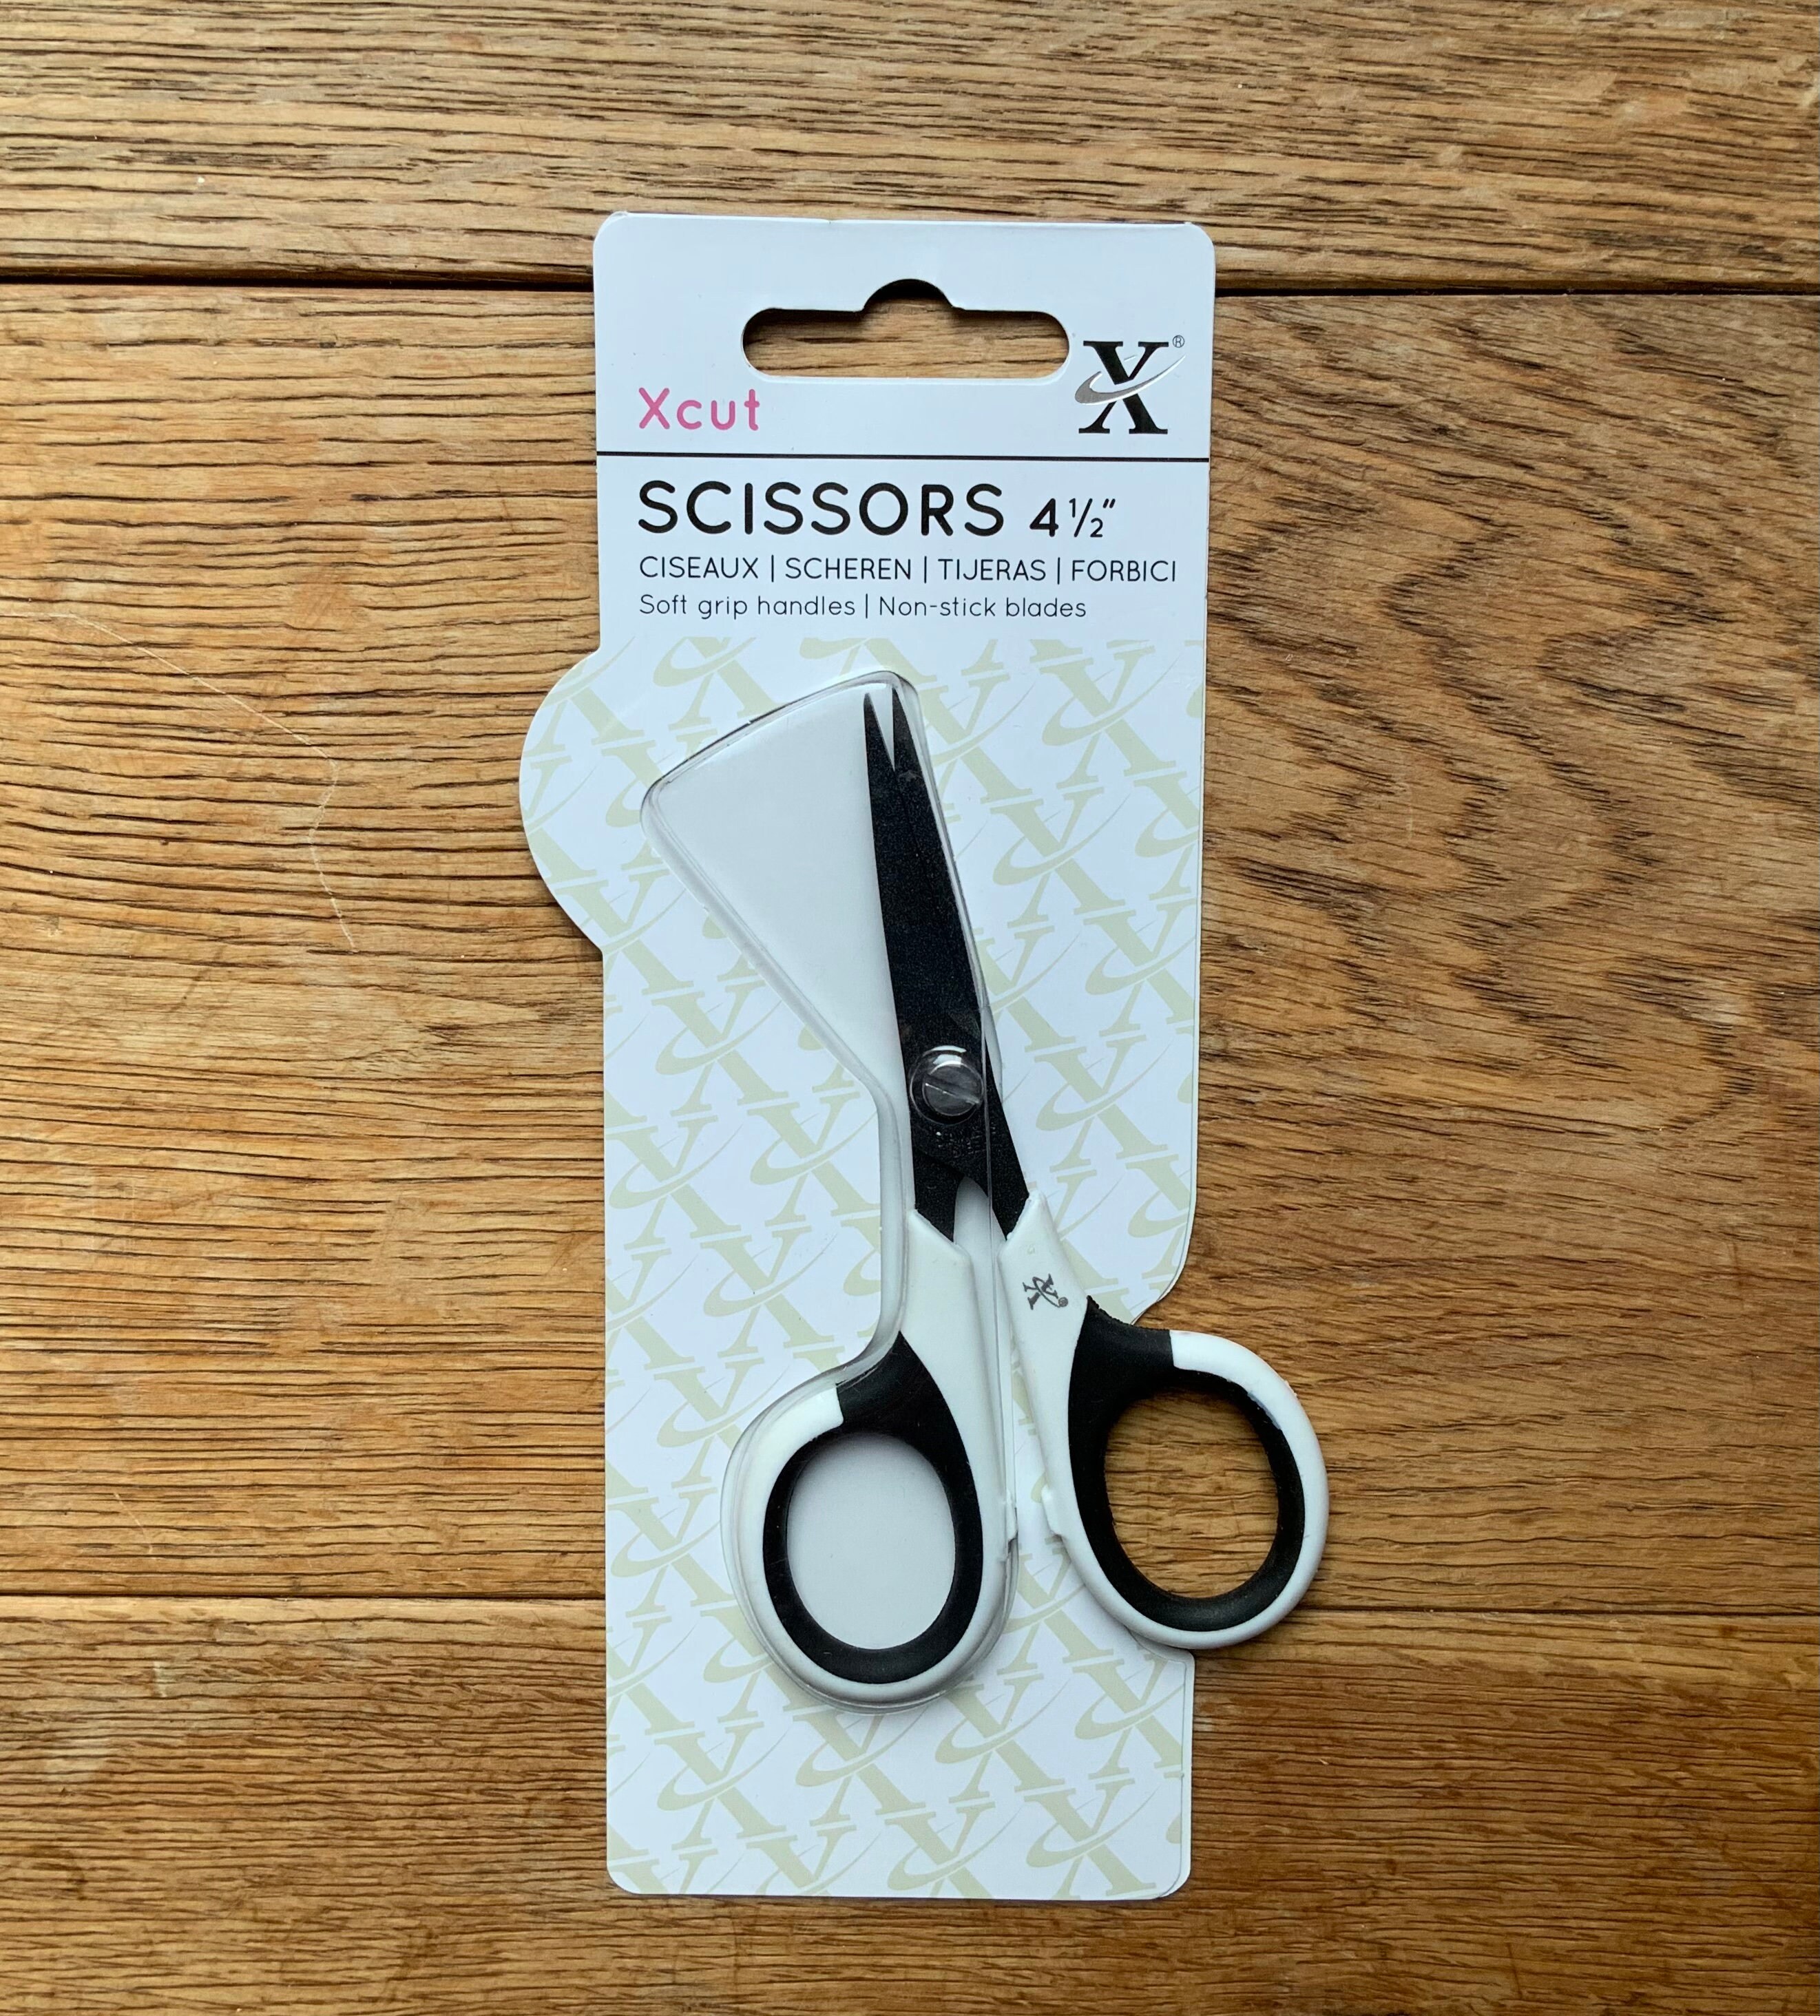 Scissors svg, scissors template, scissors dxf, scissors png